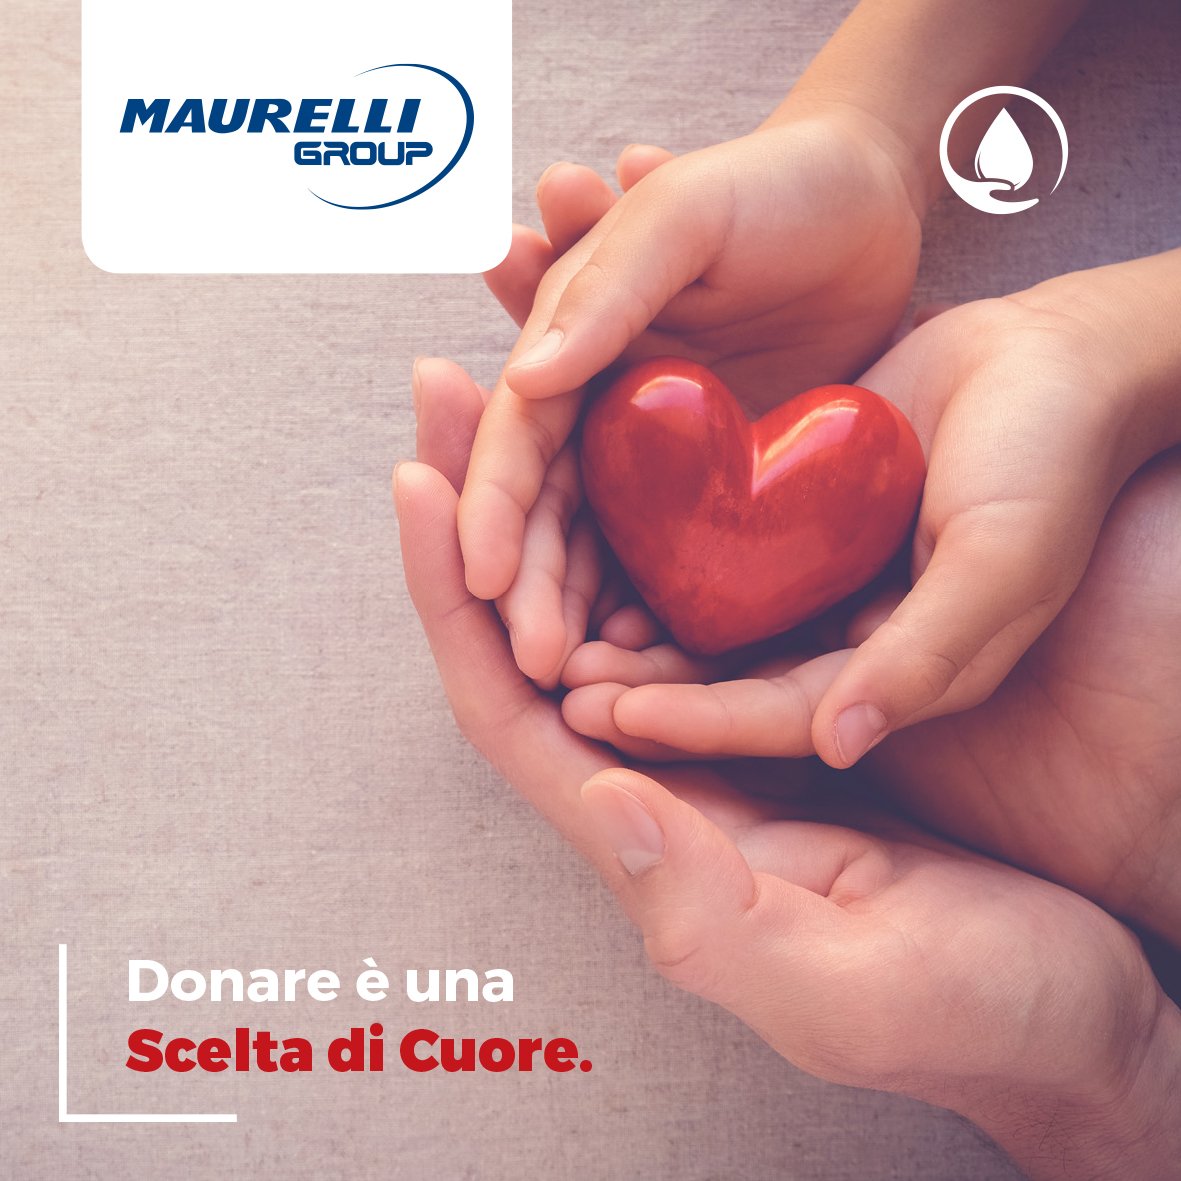 Maurelli group Donazioni